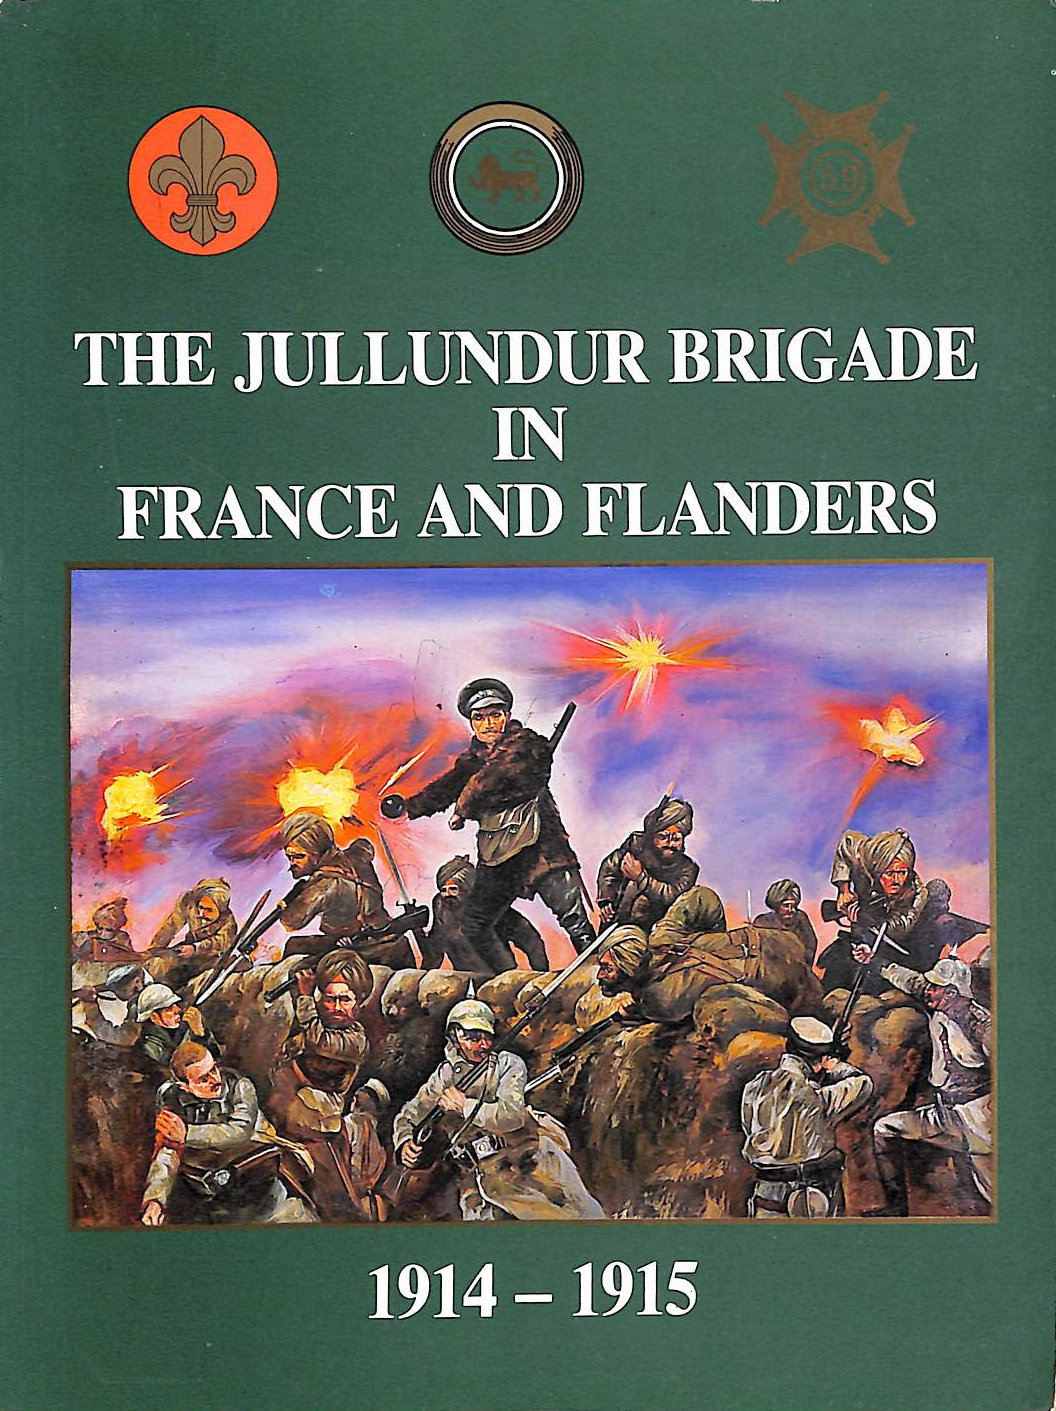 MOHINDER SINGH CHOPRA [INTRODUCTION] - The Jullundur Brigade In France And Flanders 1914-1915